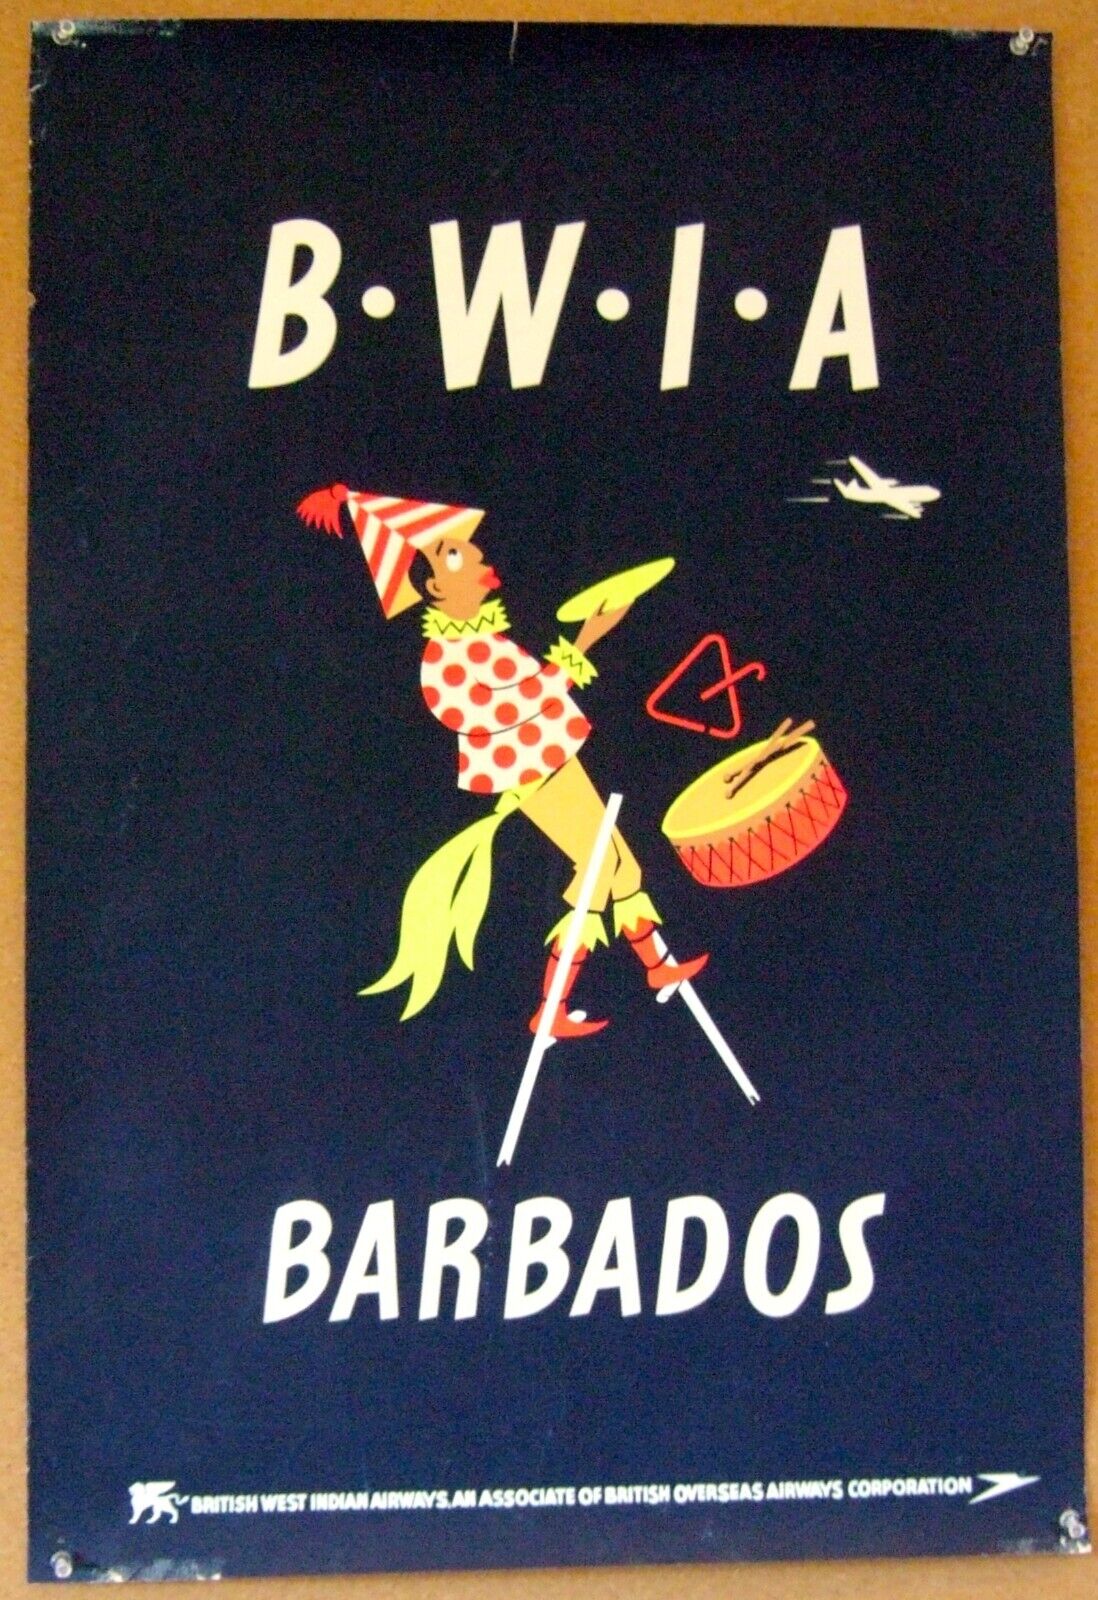 ORIGINAL 1950s BWIA British West Indies Airlines “Barbados” travel poster